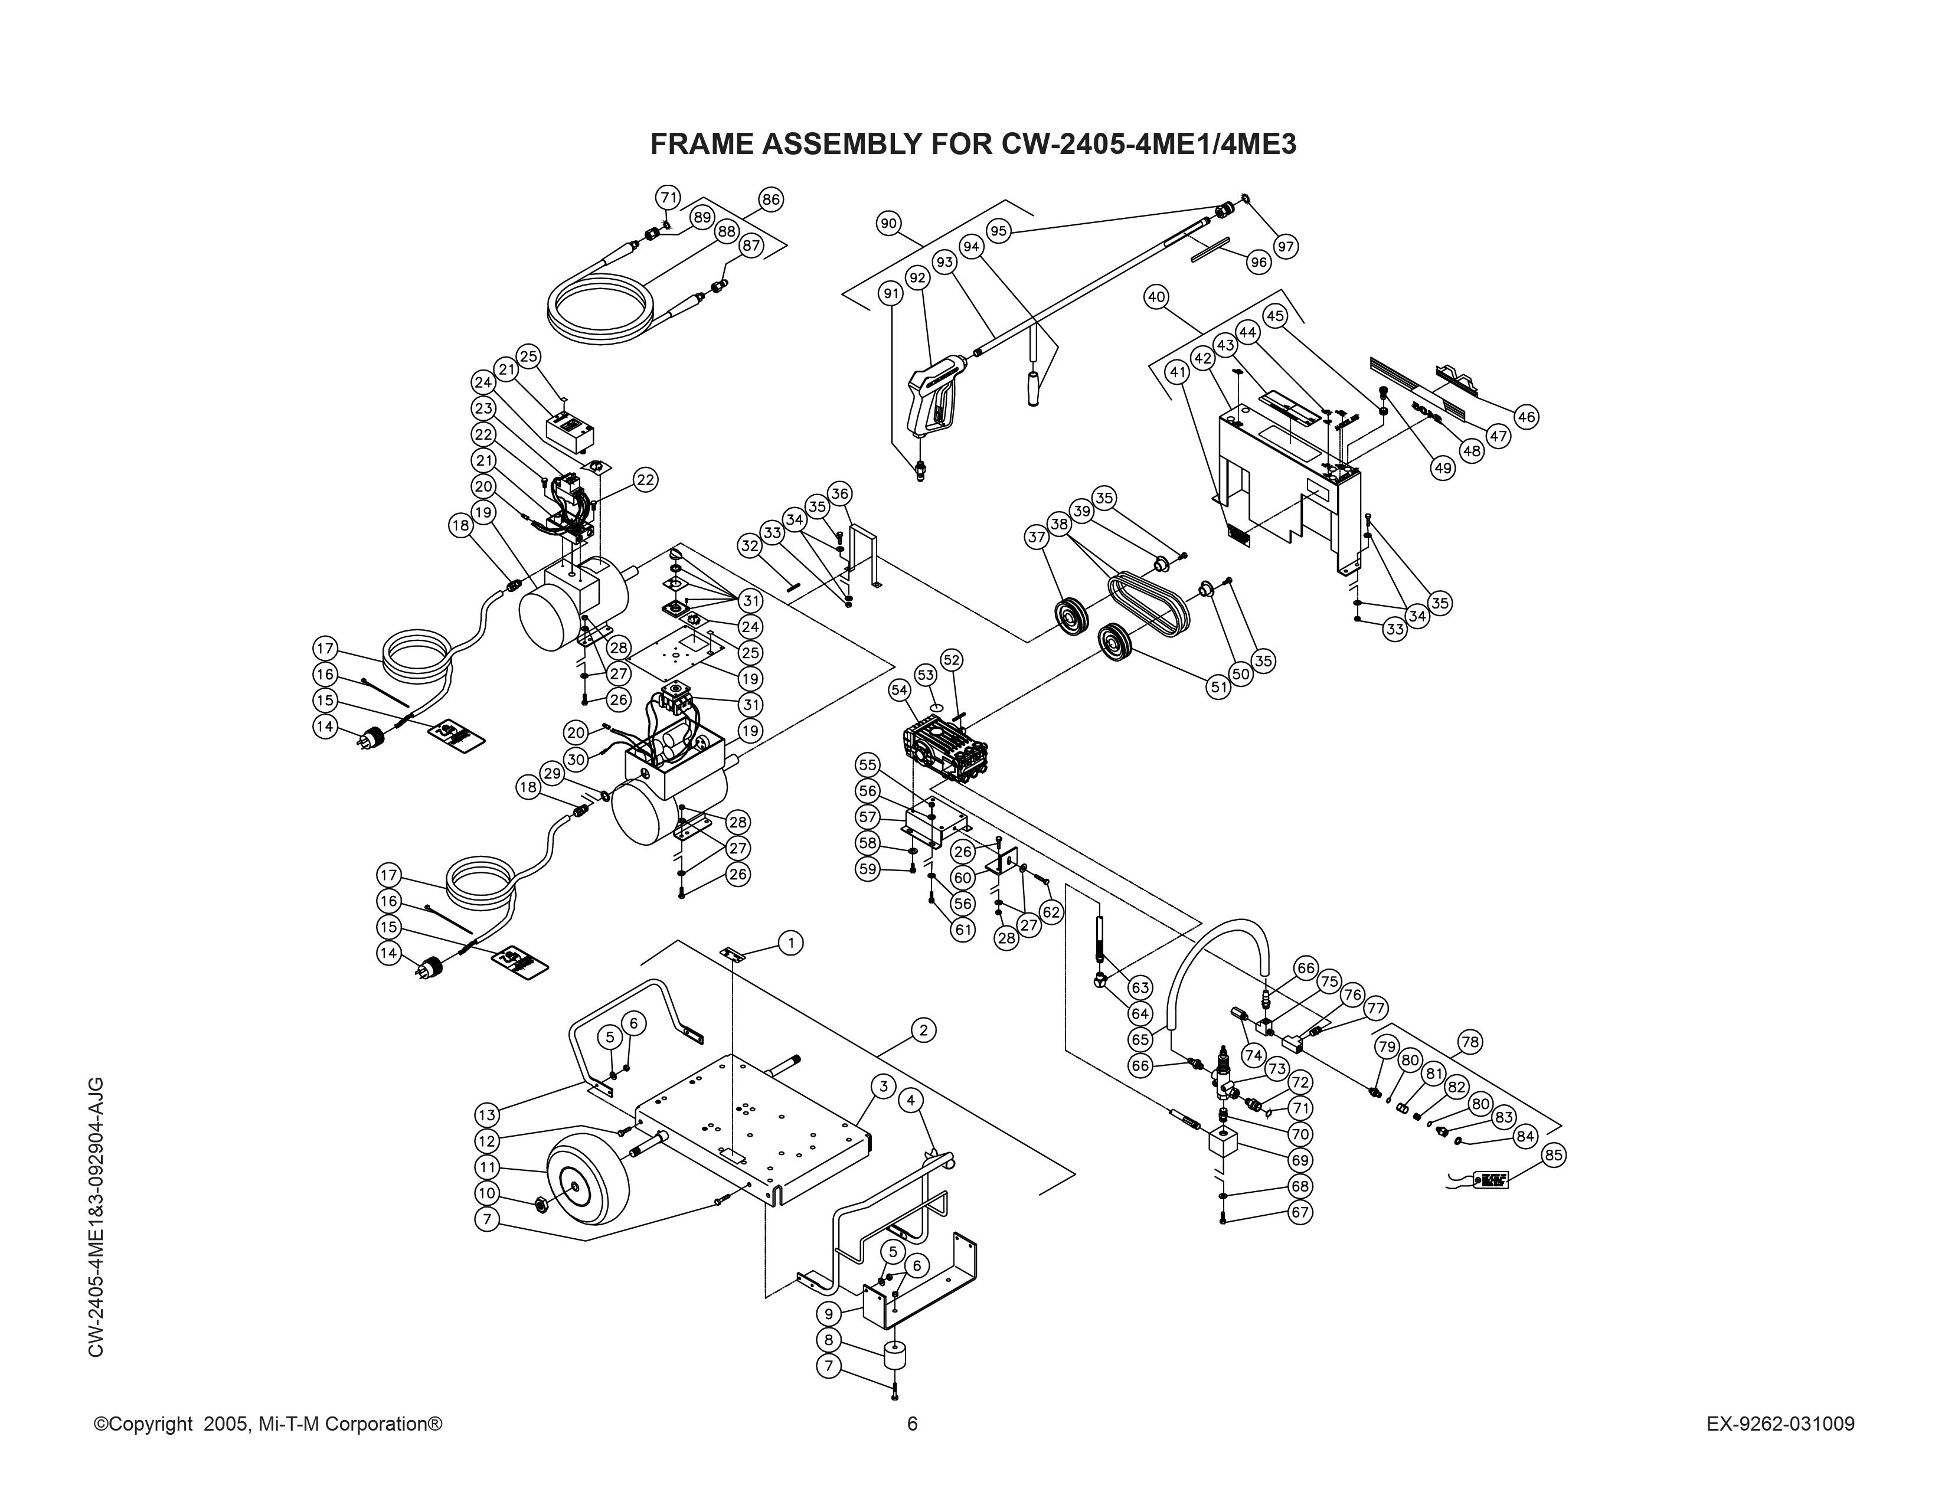 CW-3006-1ME3 Pressure Washer Breakdown, repair kits, pumps & owners manuals.